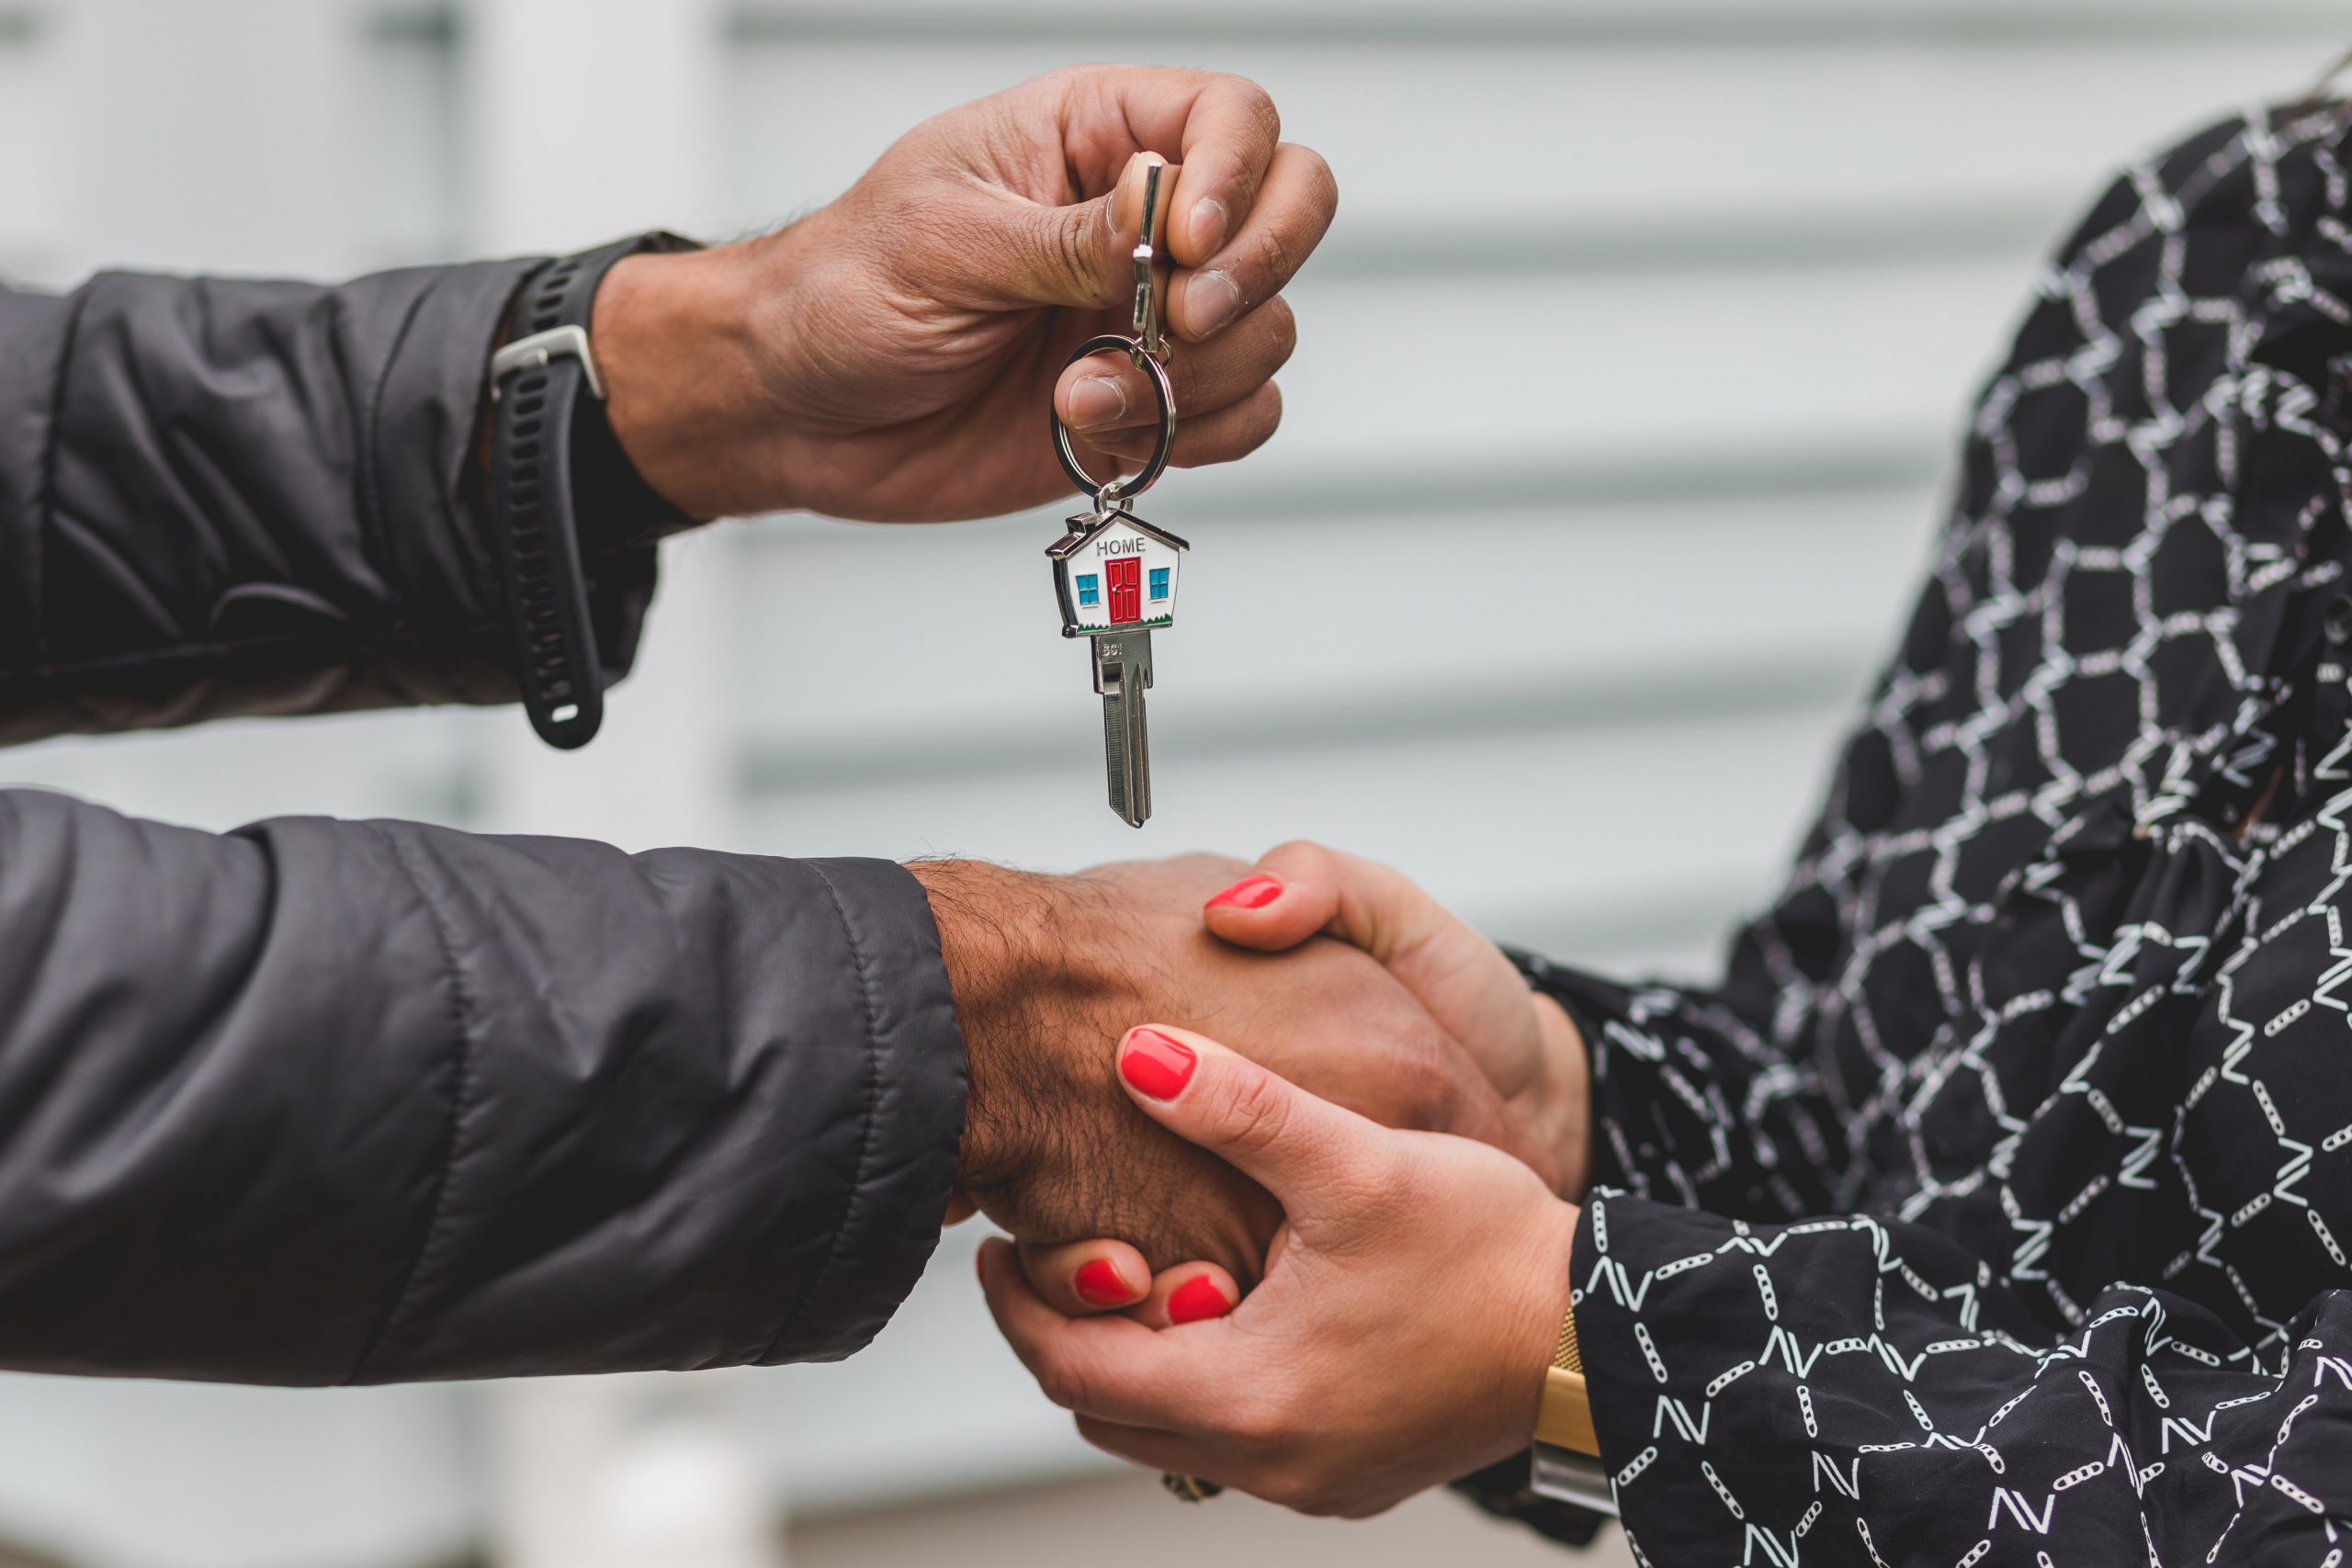 Realtor giving house keys to homeowner